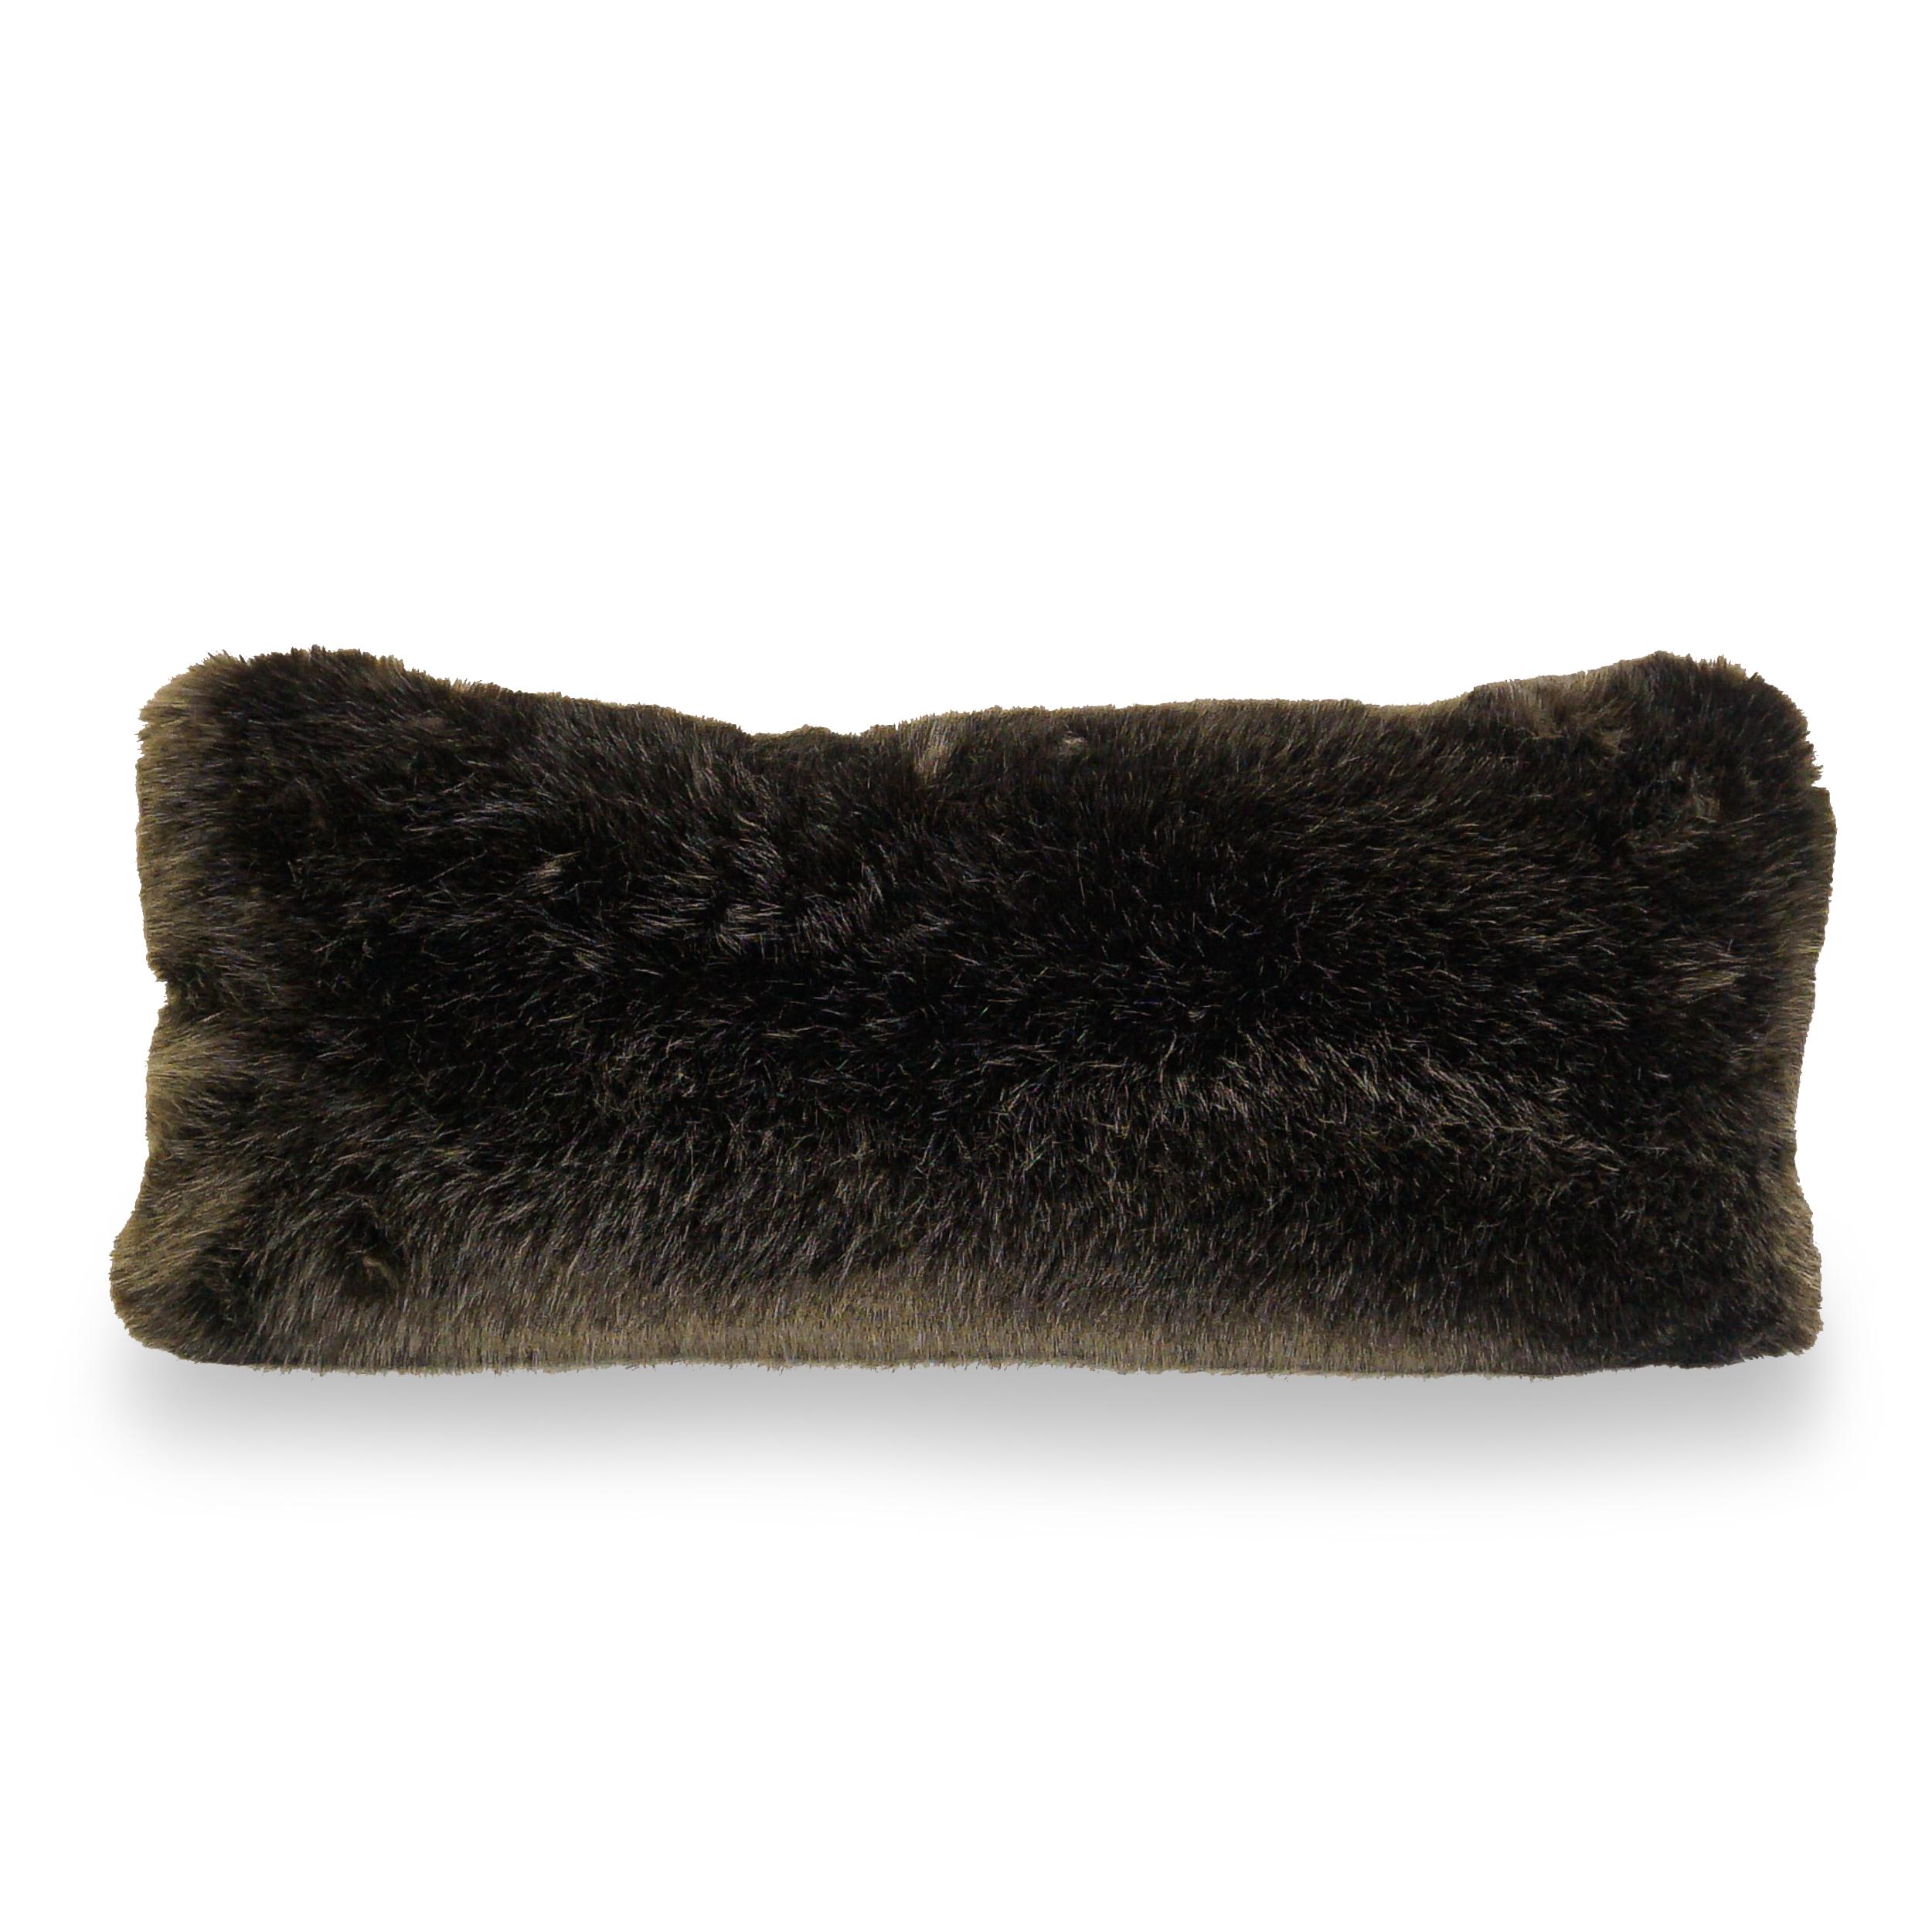 Fantastical Leopard Unicorn Lumbar Pillows with Faux Fur For Sale 6